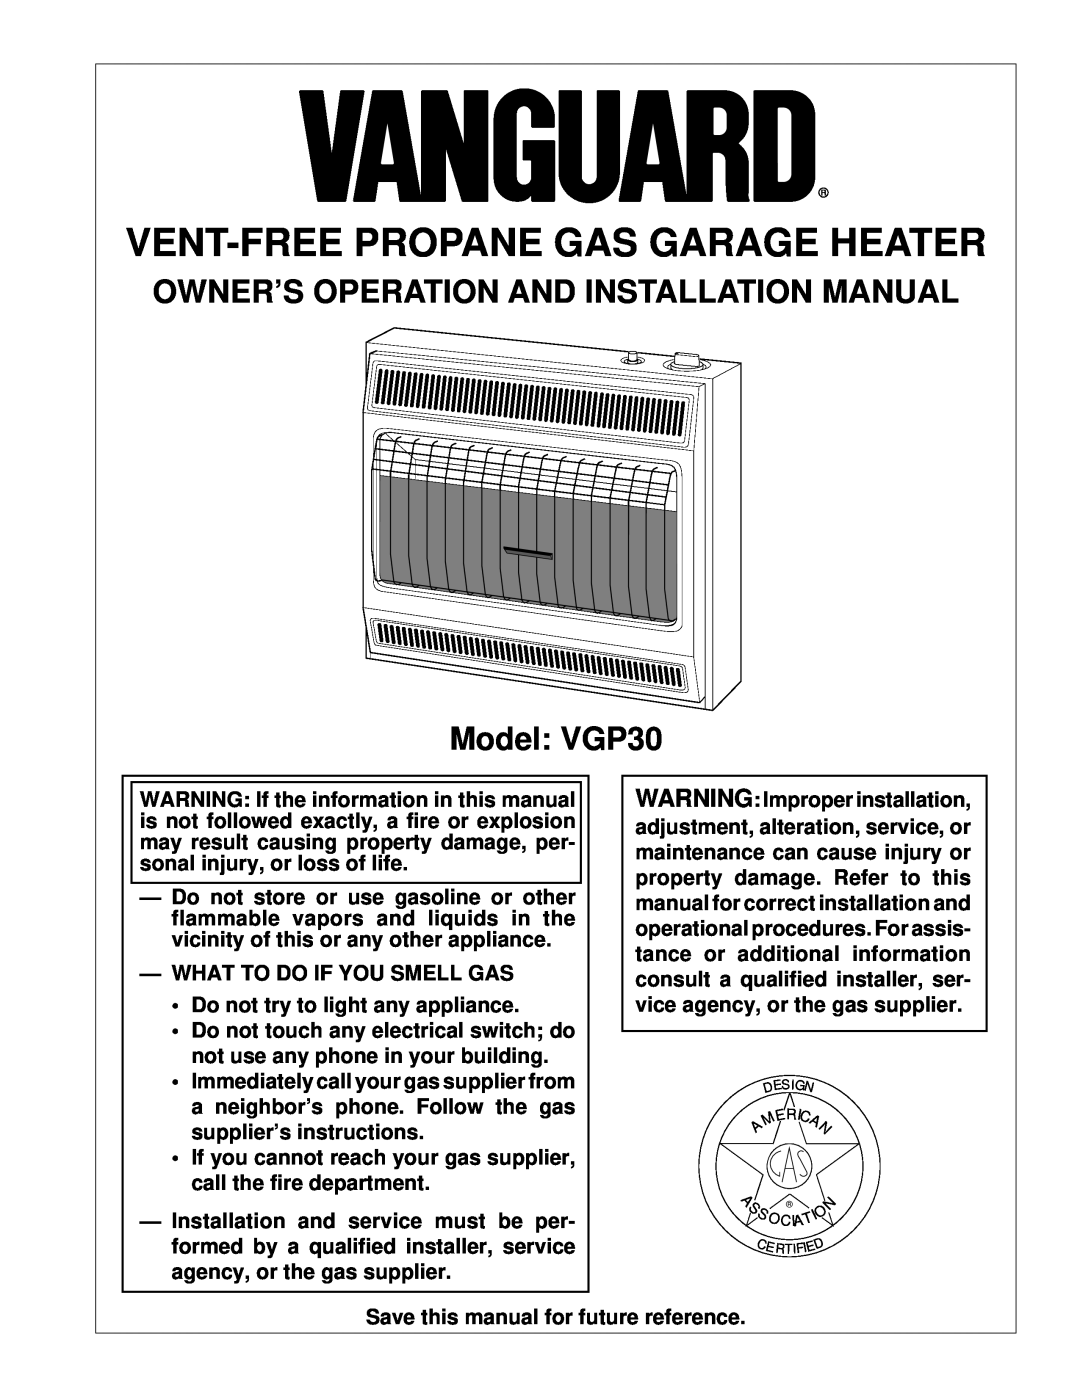 Desa installation manual Owner’S Operation And Installation Manual, Model VGP30, Vent-Freepropane Gas Garage Heater 